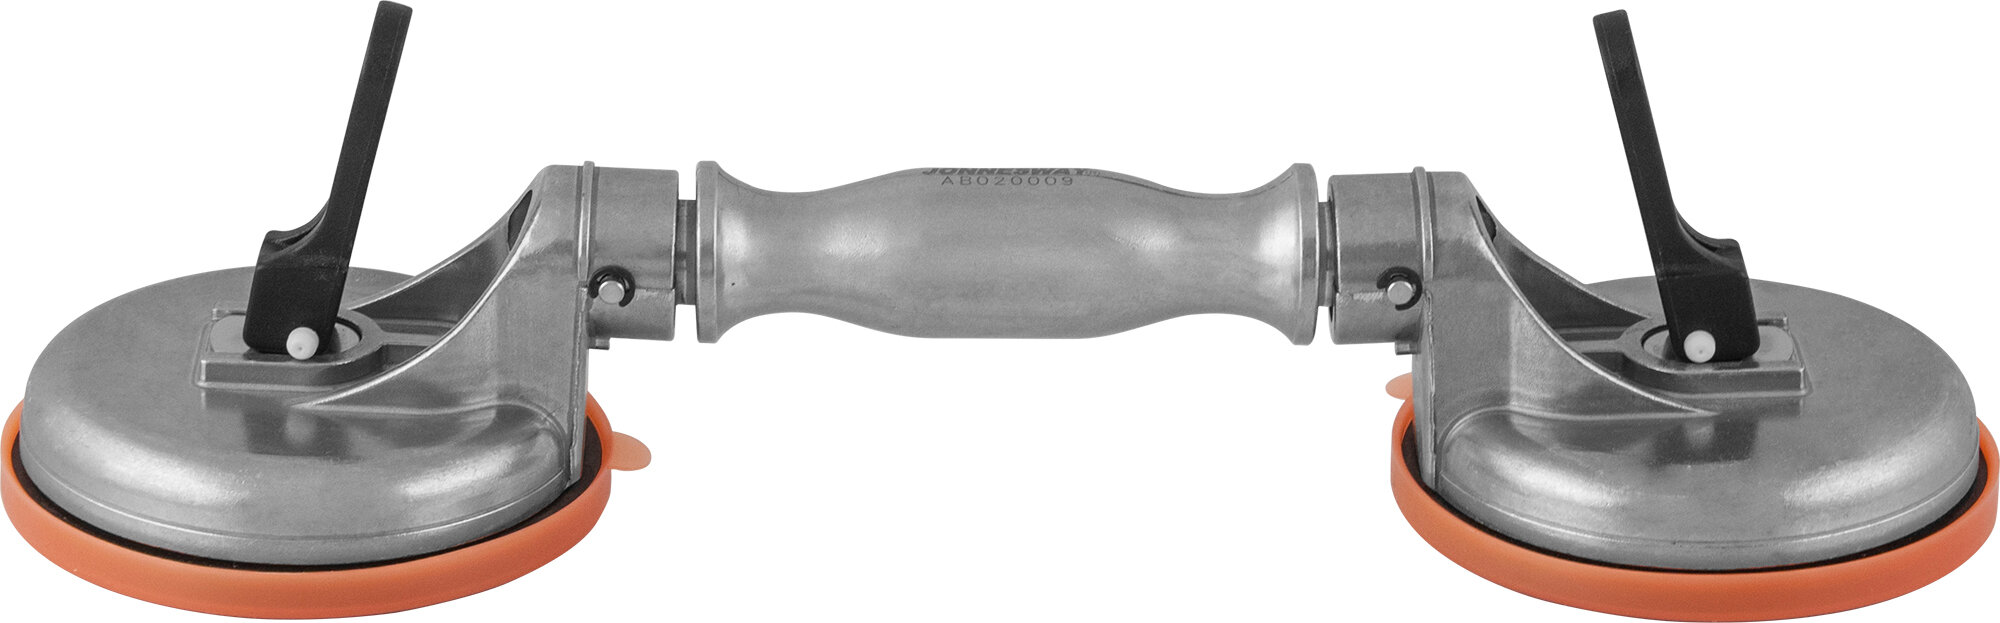 Стеклосъемник двойной (алюминий диаметр 115 мм) AB020009